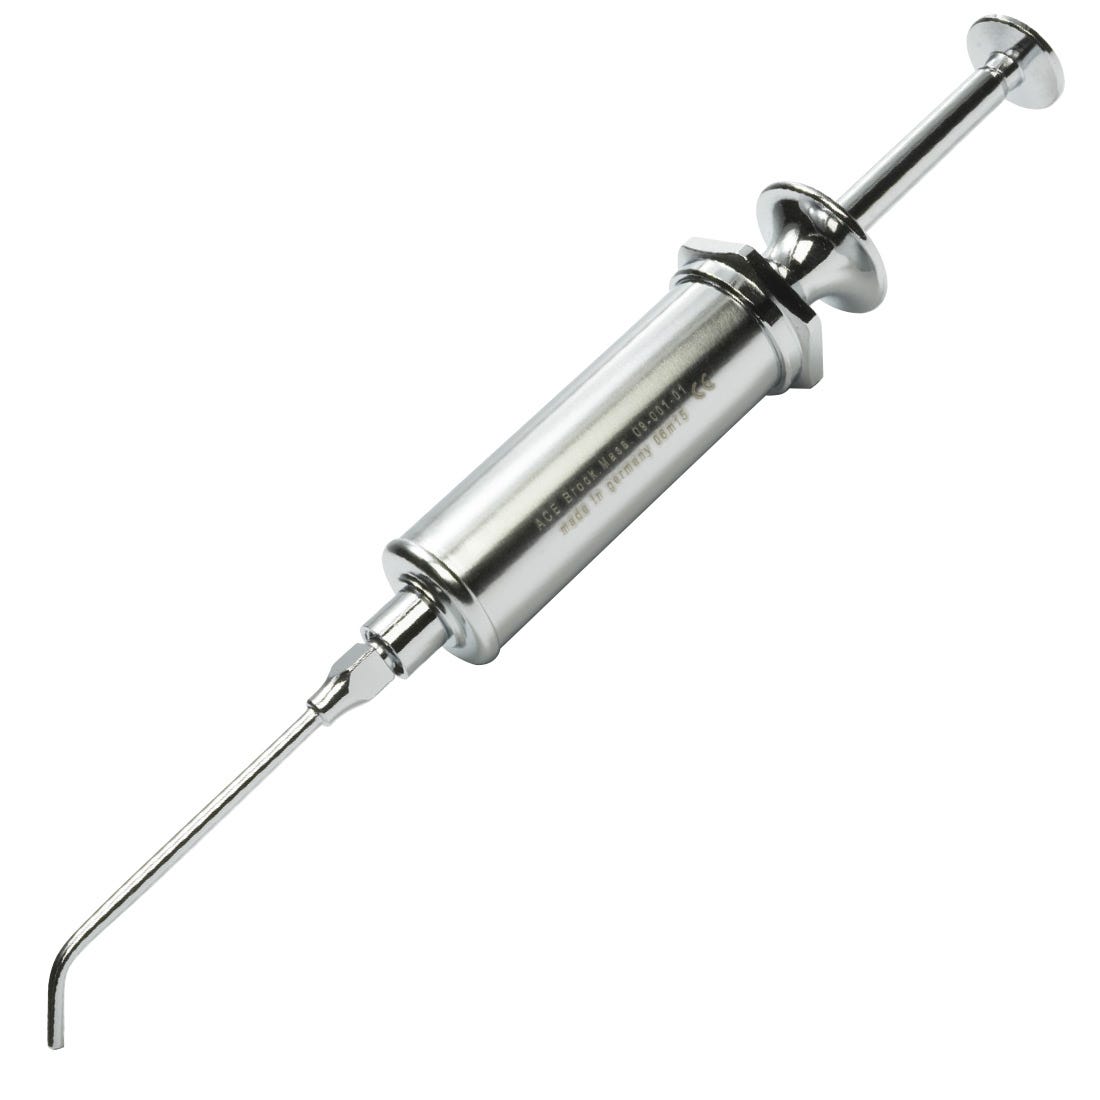 ACE Self-Filling Irrigation Syringe